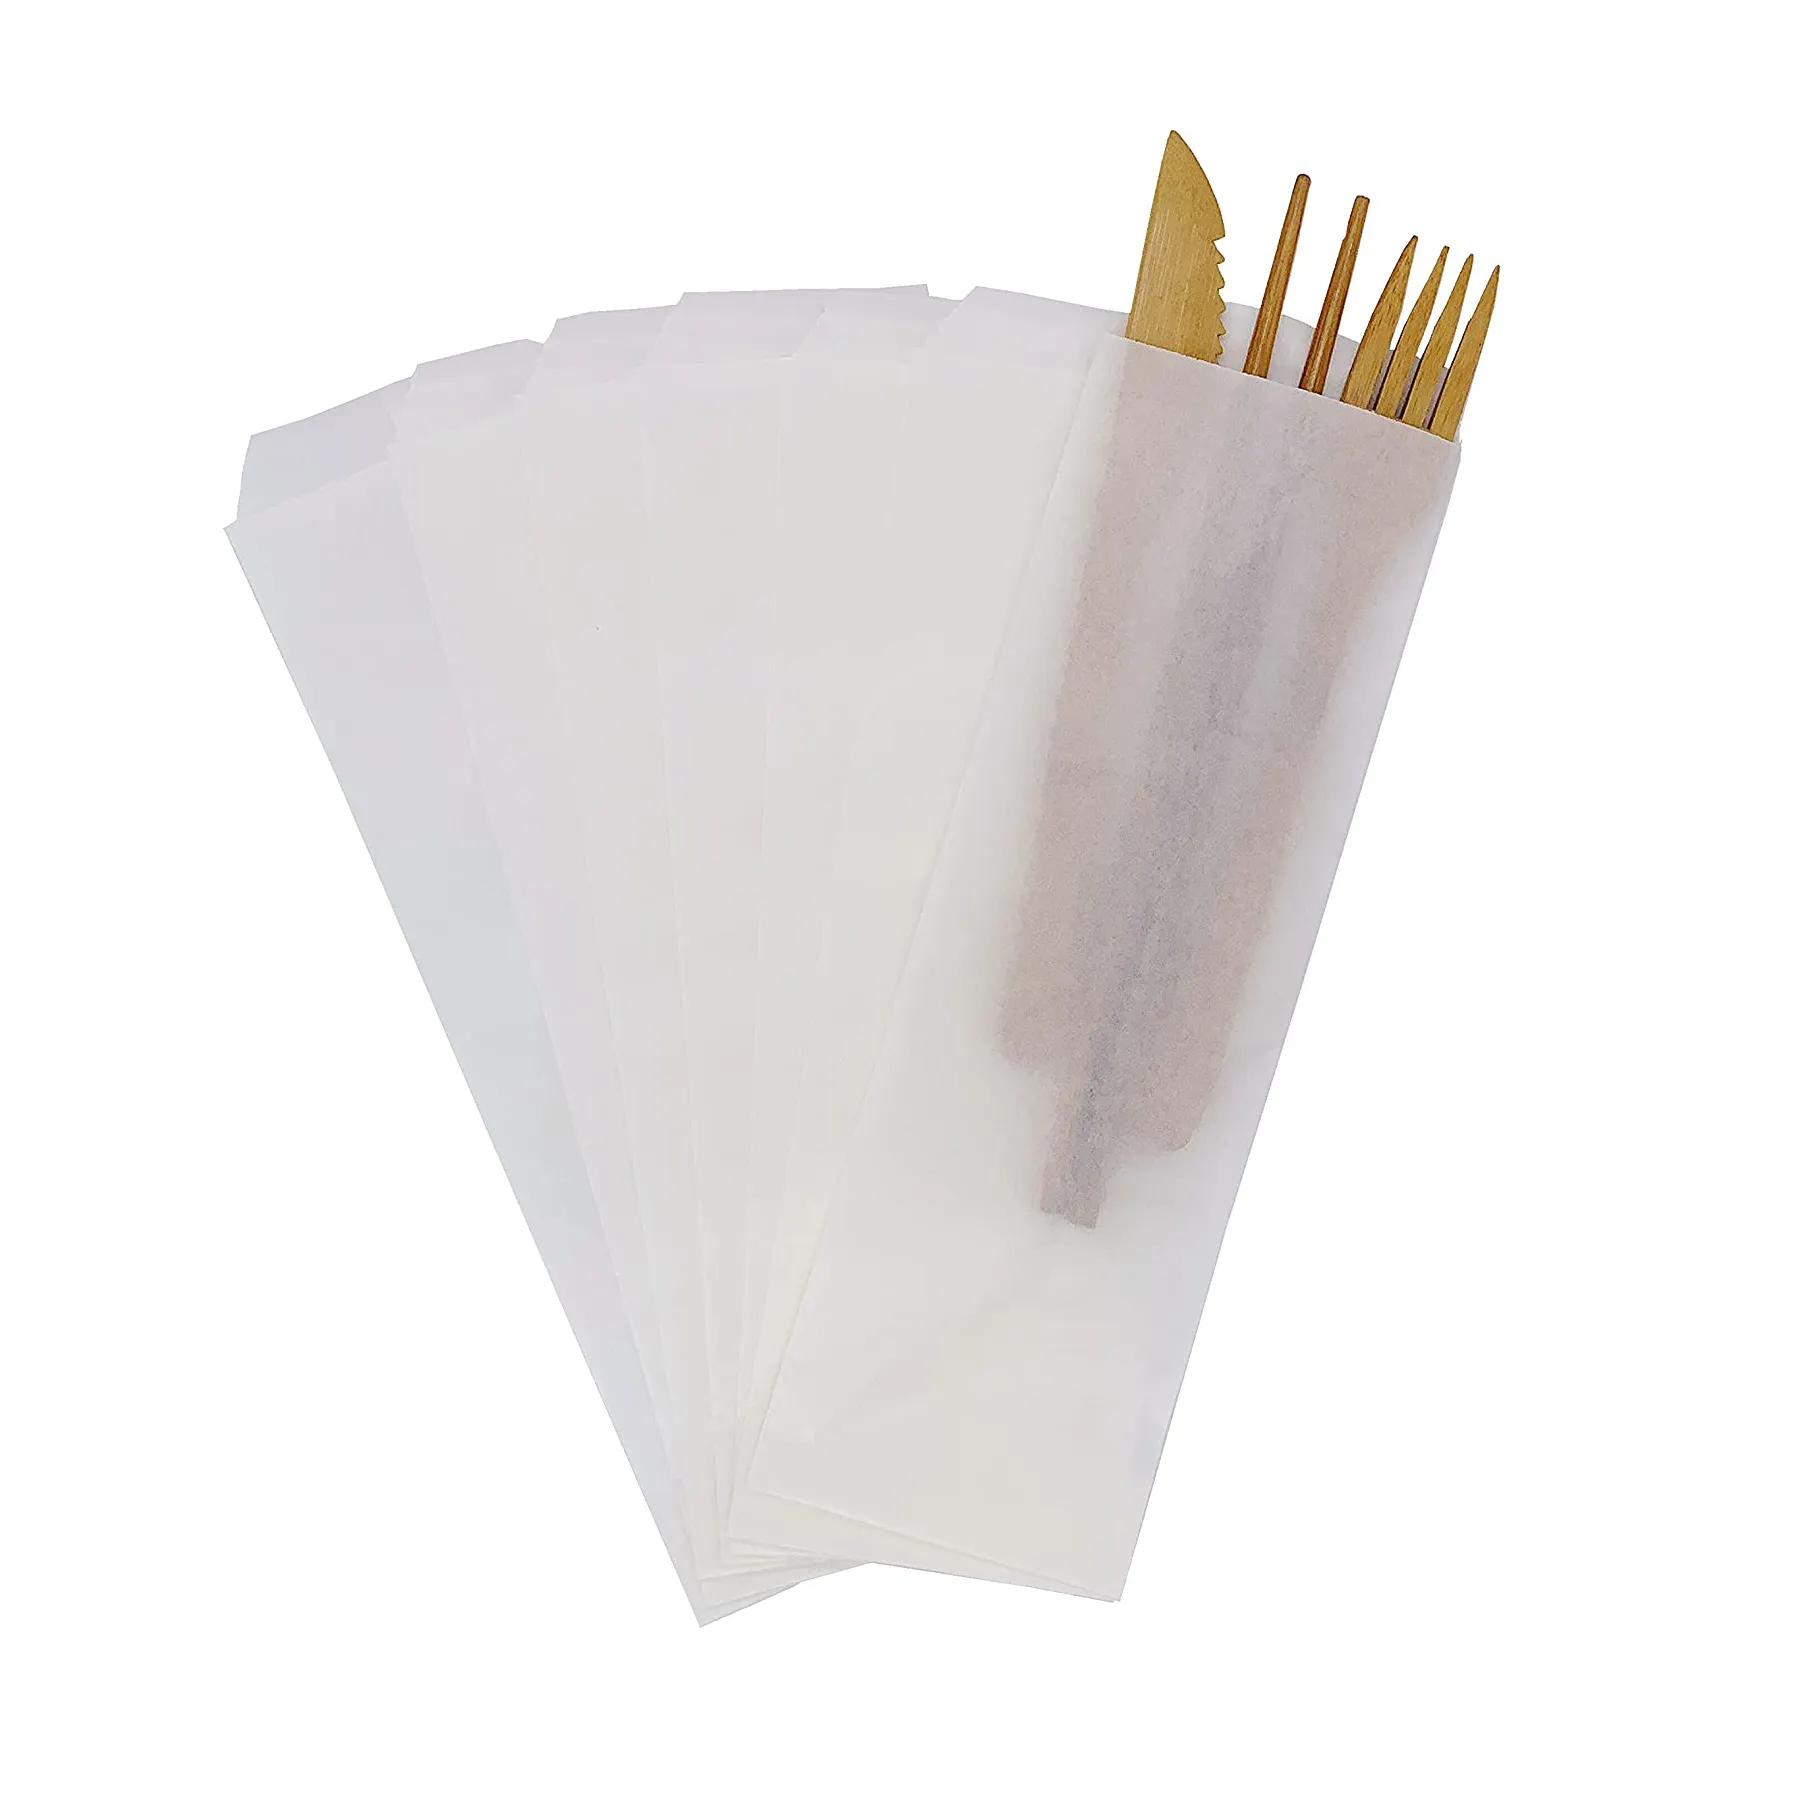 Sacchetti di carta Glassine piatti per caramelle Churros Pretzel Sticks posate da cucina portautensili stoviglie posate posate